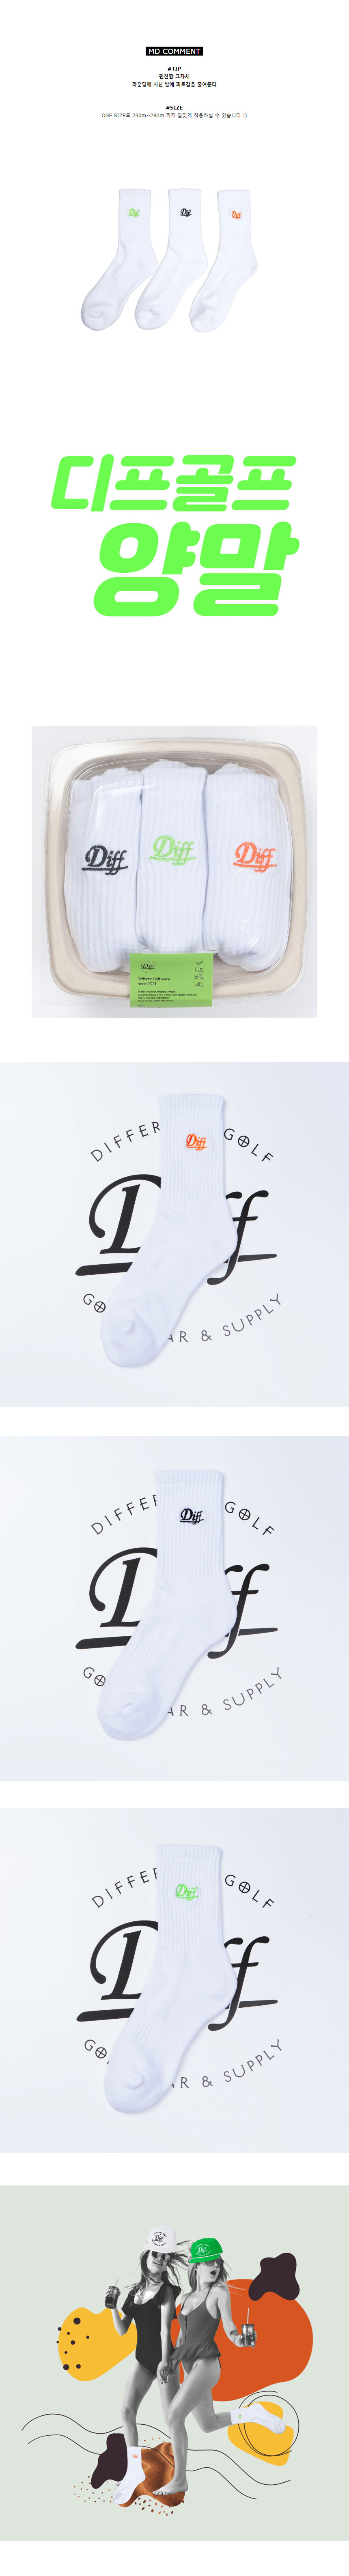 diff_classic_logo_socks_22.jpg